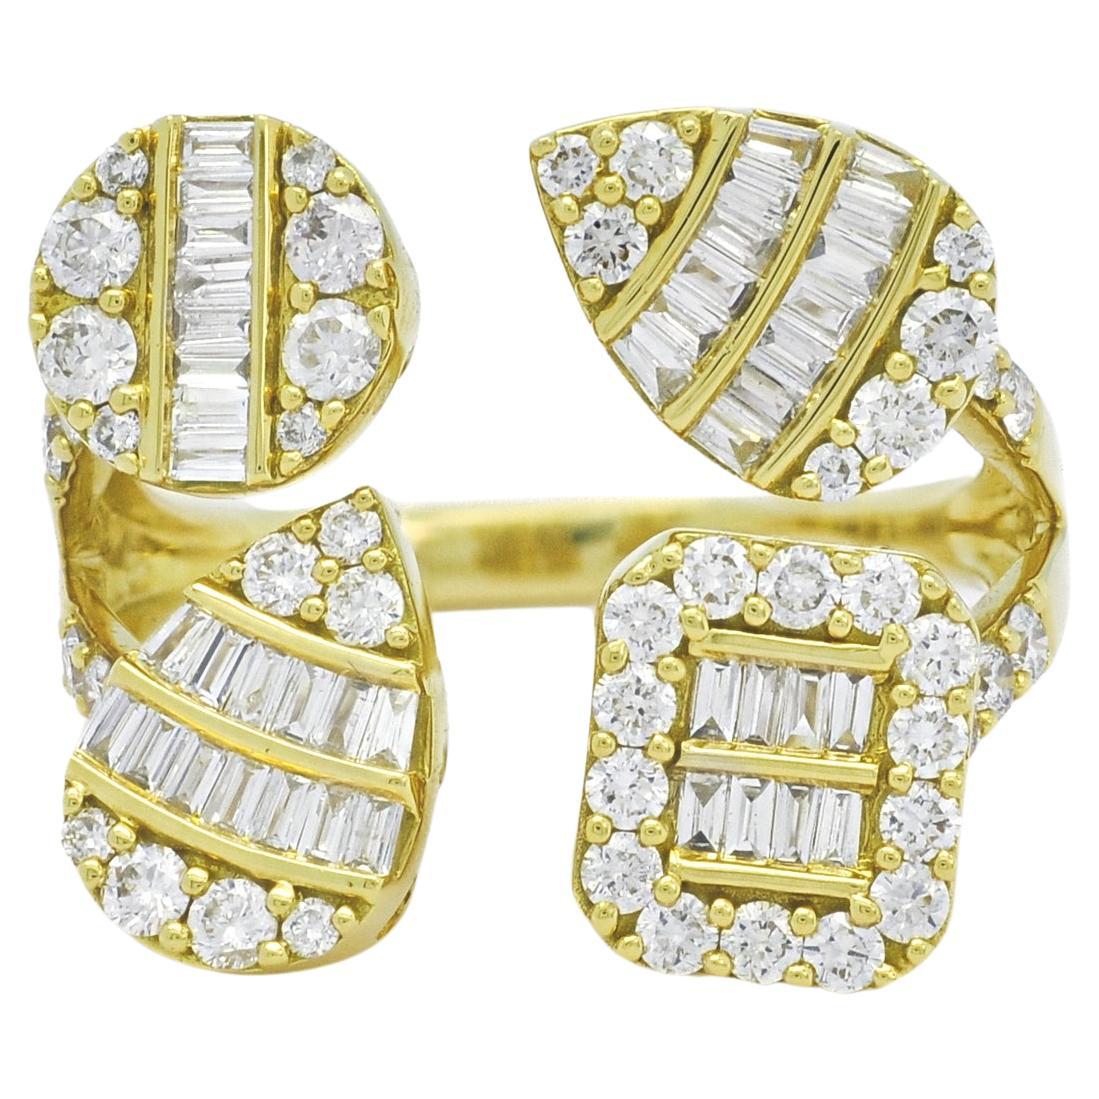 Natural Diamond Ring 1.26 cts 18 Karat Yellow Gold High Fashion Statement Ring For Sale